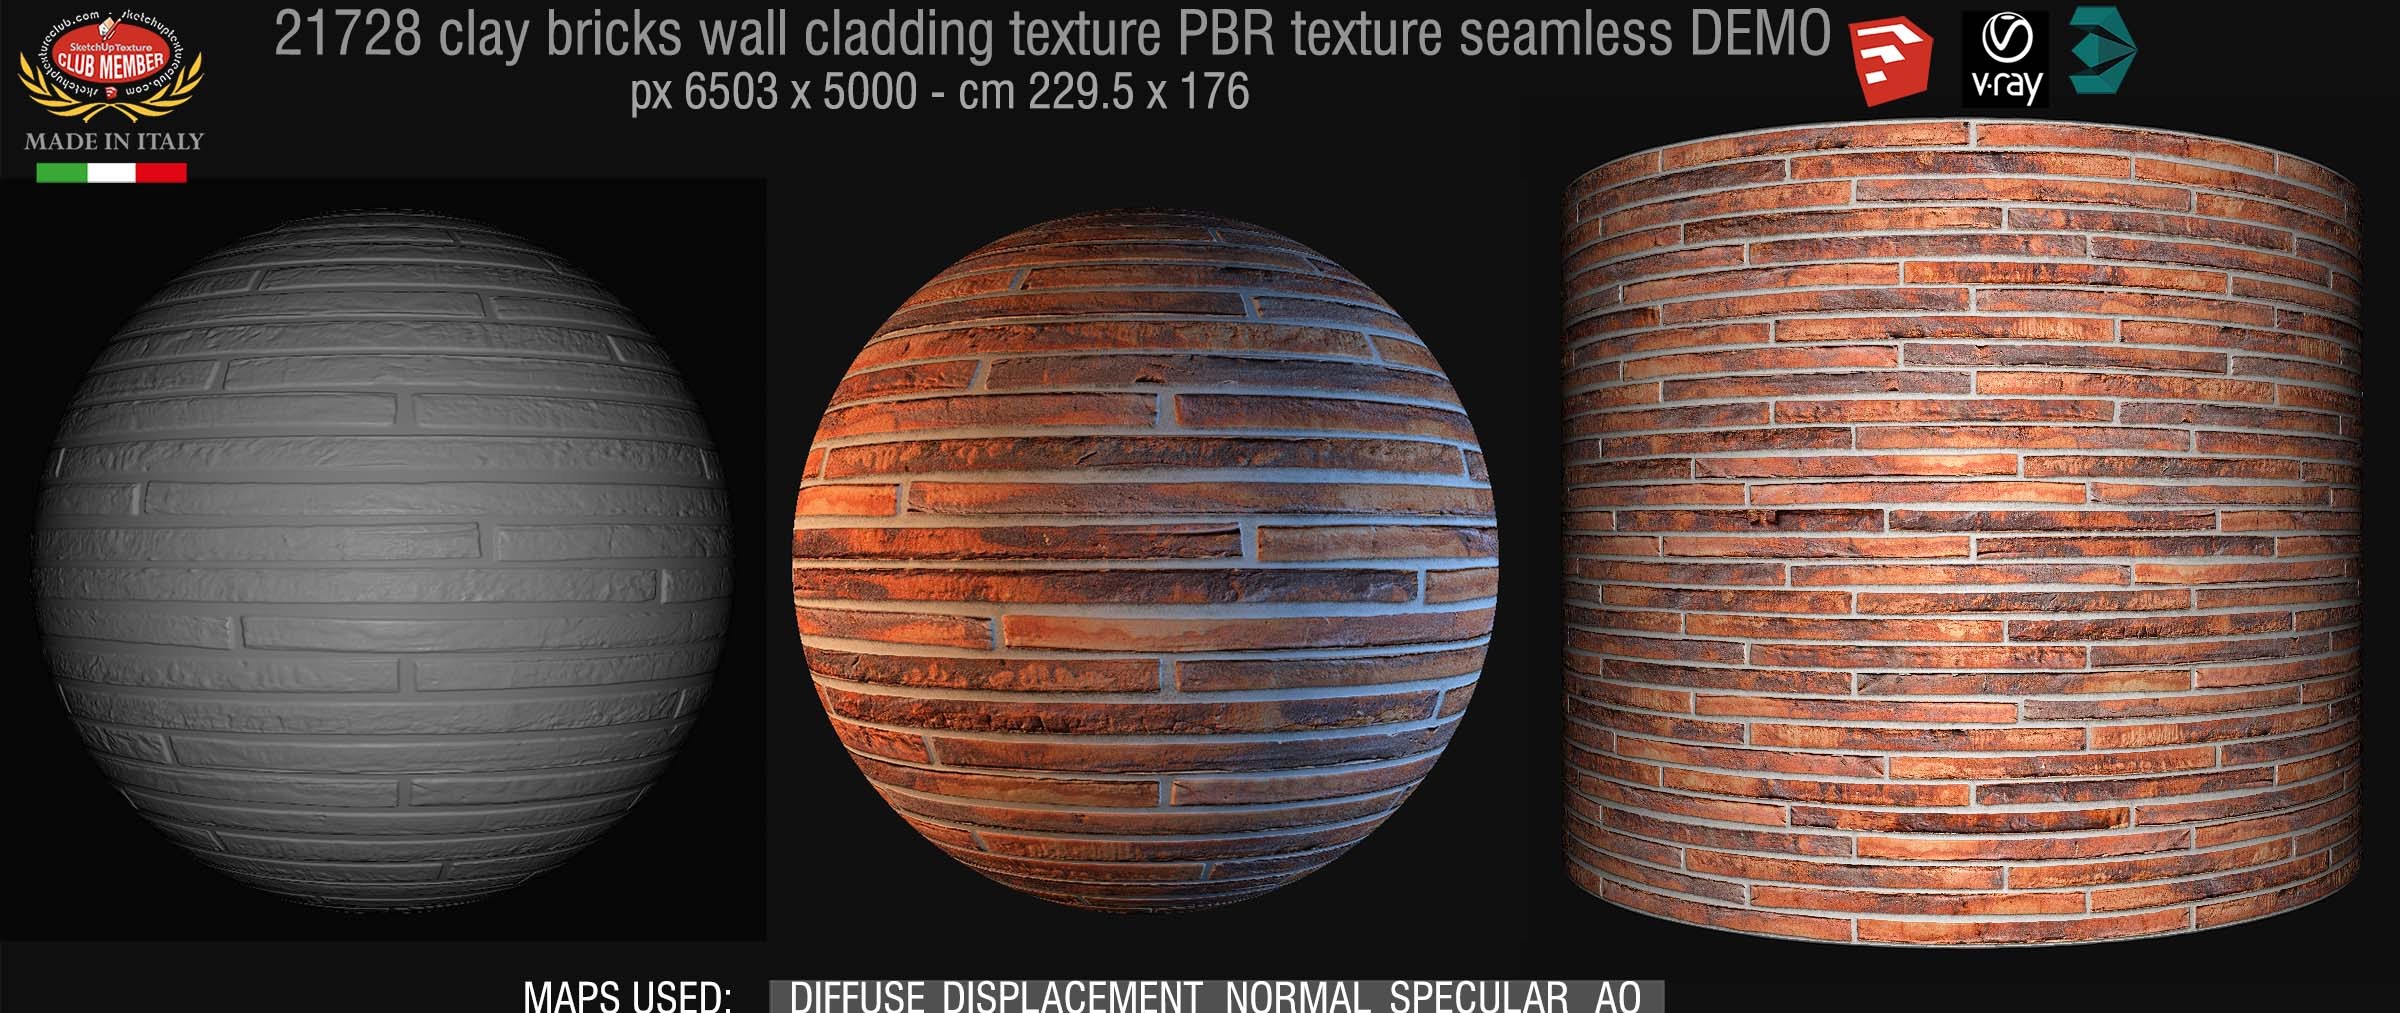 21728 Clay bricks wall cladding PBR texture seamless DEMO